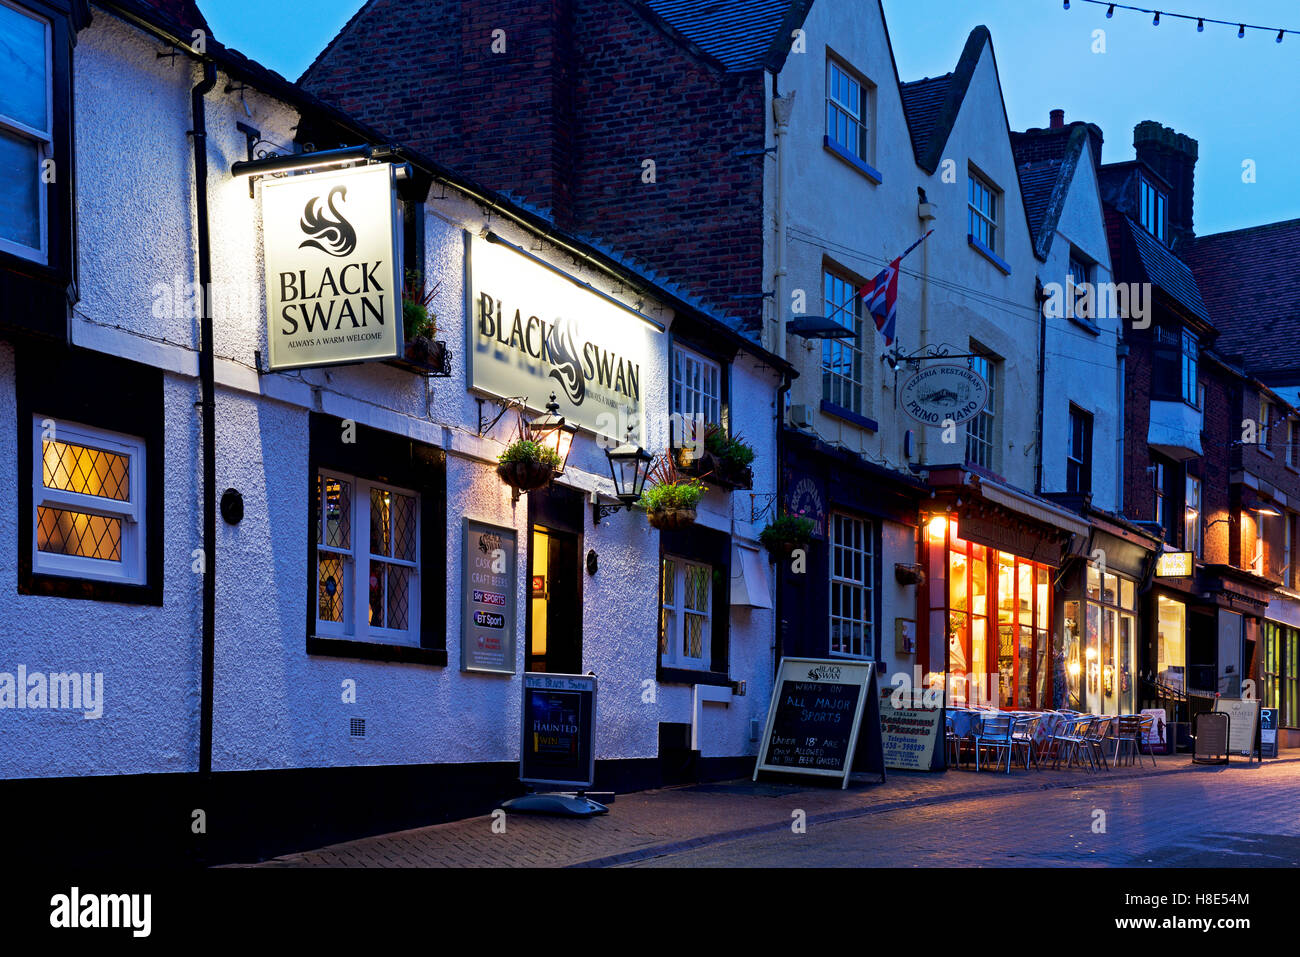 The Black Swan pub at night, Leek, Staffordshire, England UK Stock Photo